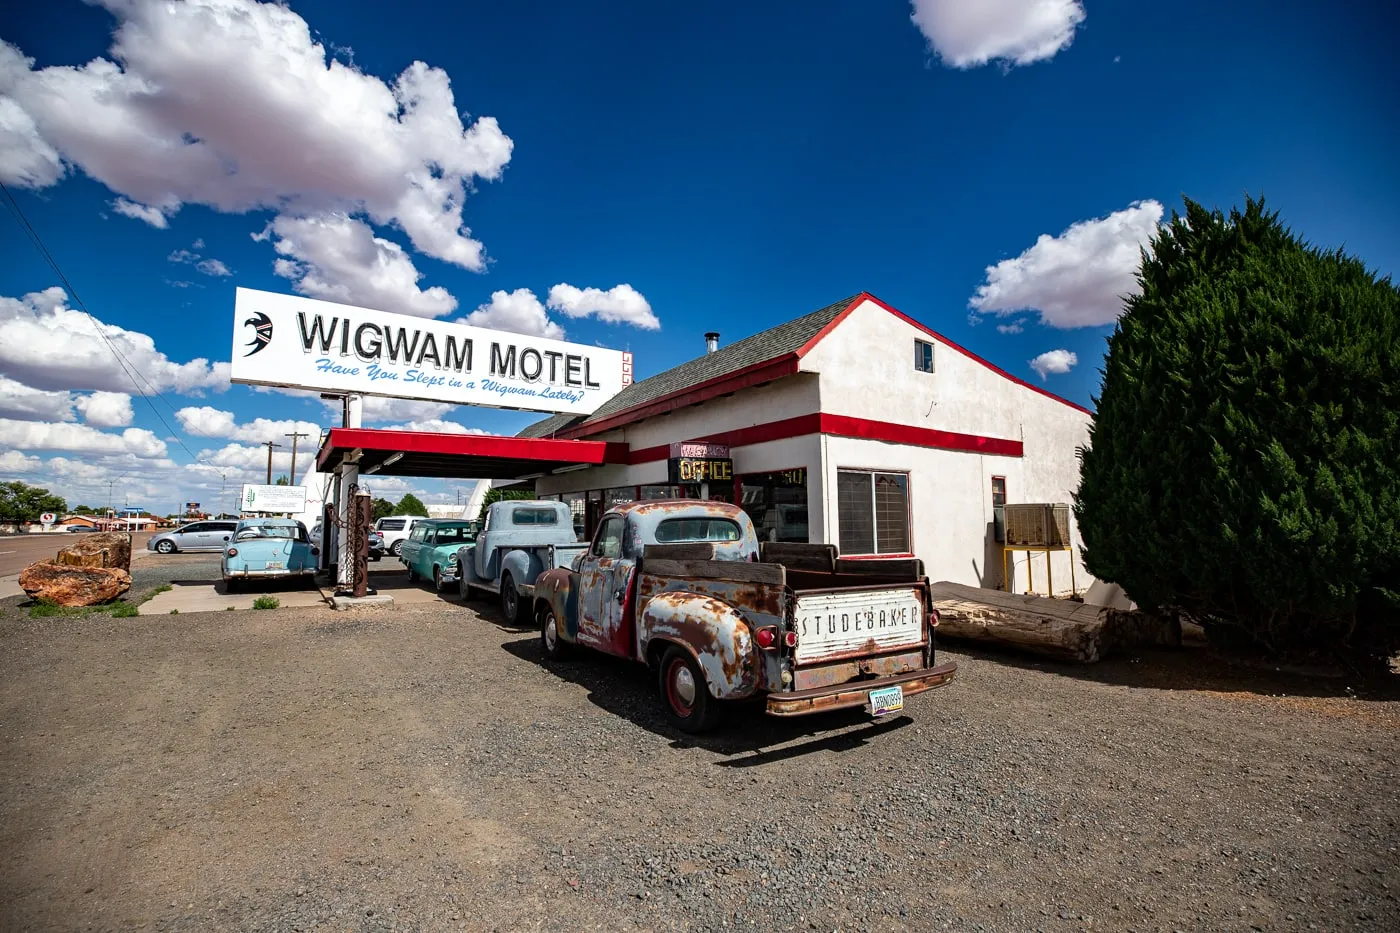 Reception building at Wigwam Motel in Holbrook, Arizona - Route 66 Motel - Wigwam Village Motel #6